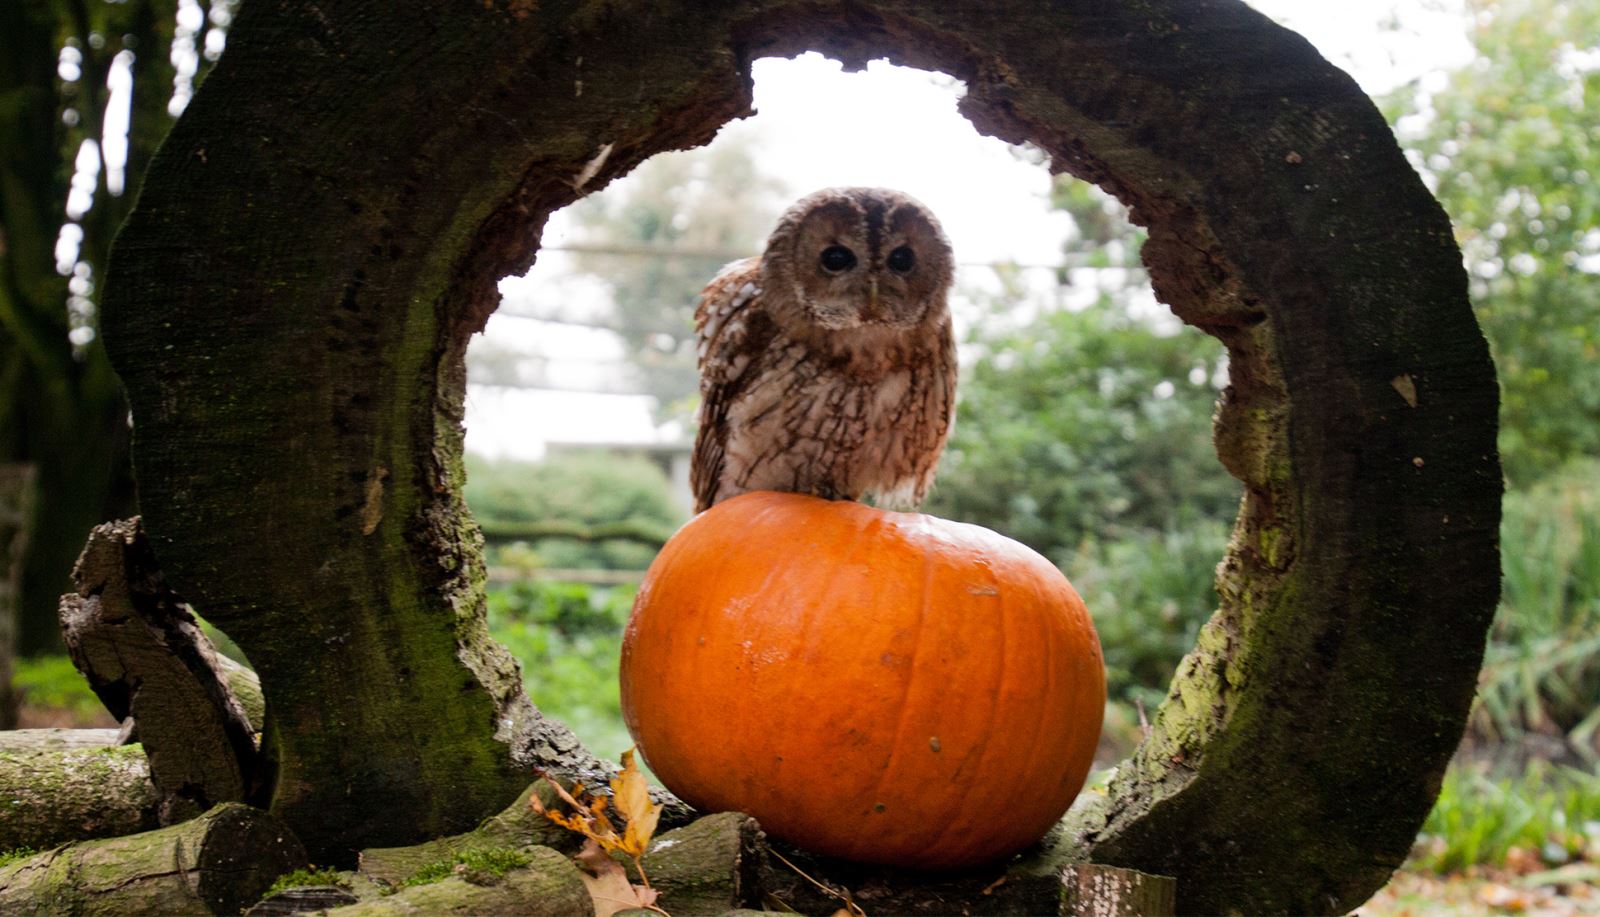 Owl on pumpkin